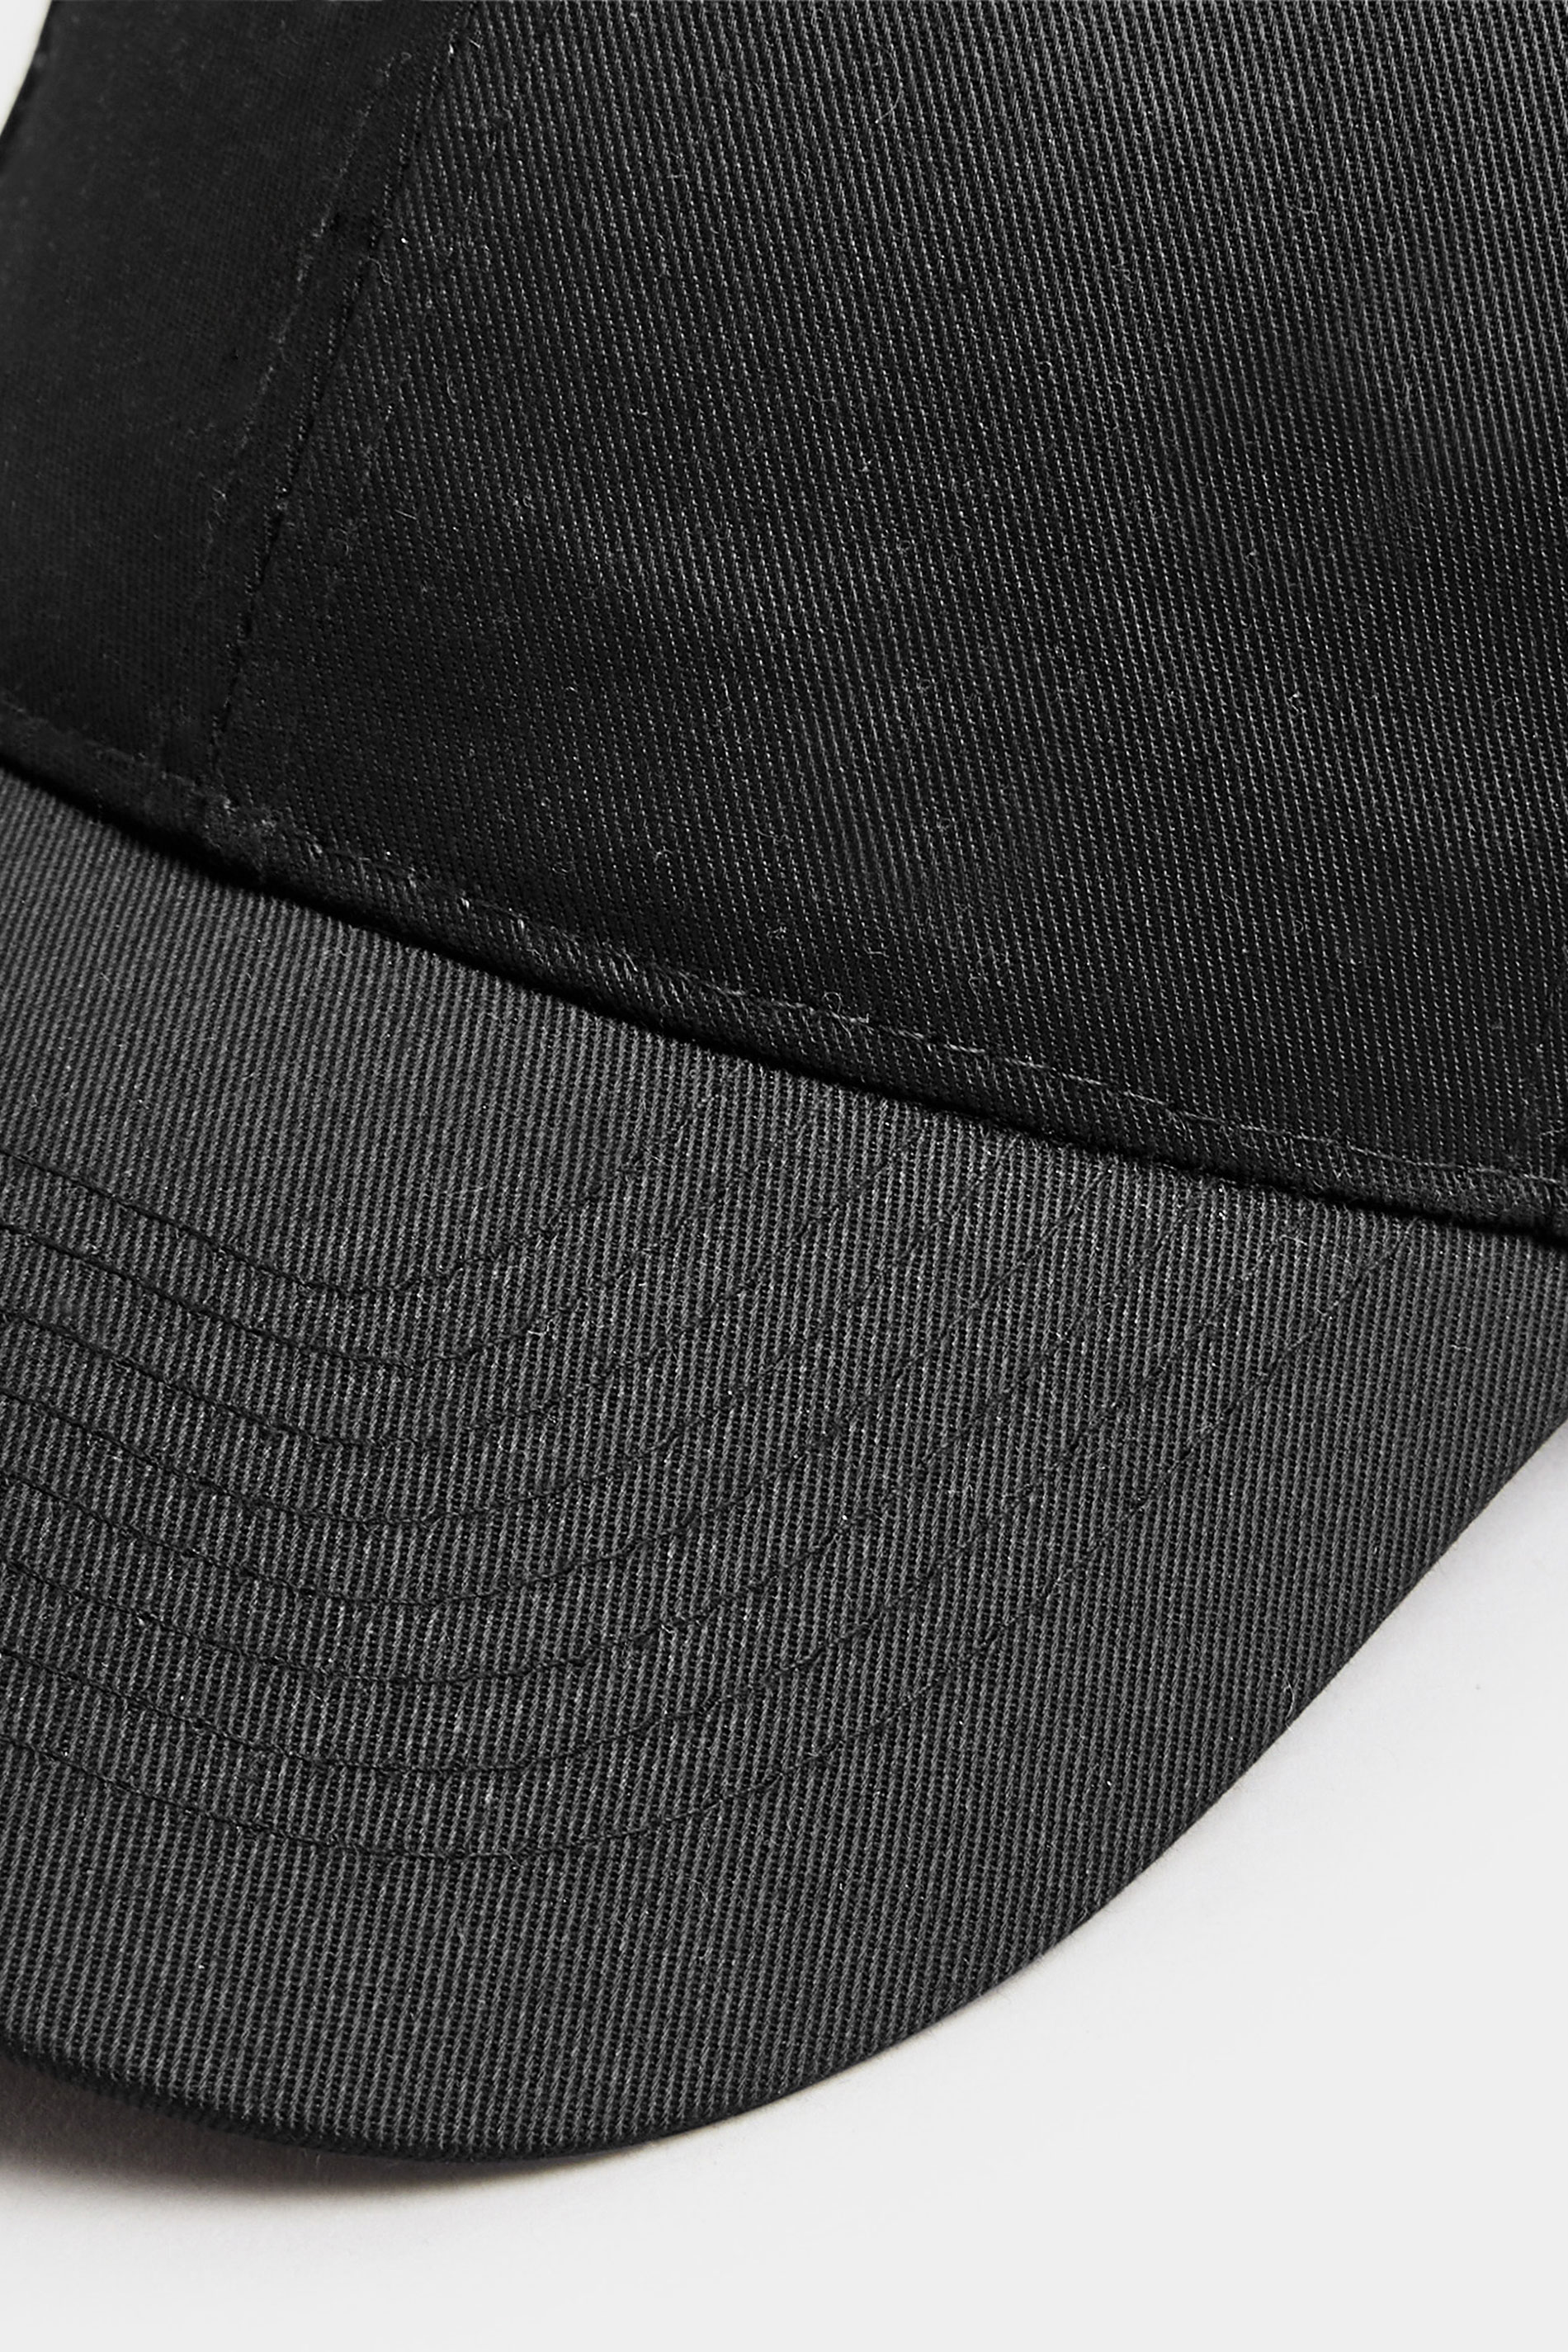 Black Baseball Cap | Yours Clothing 3